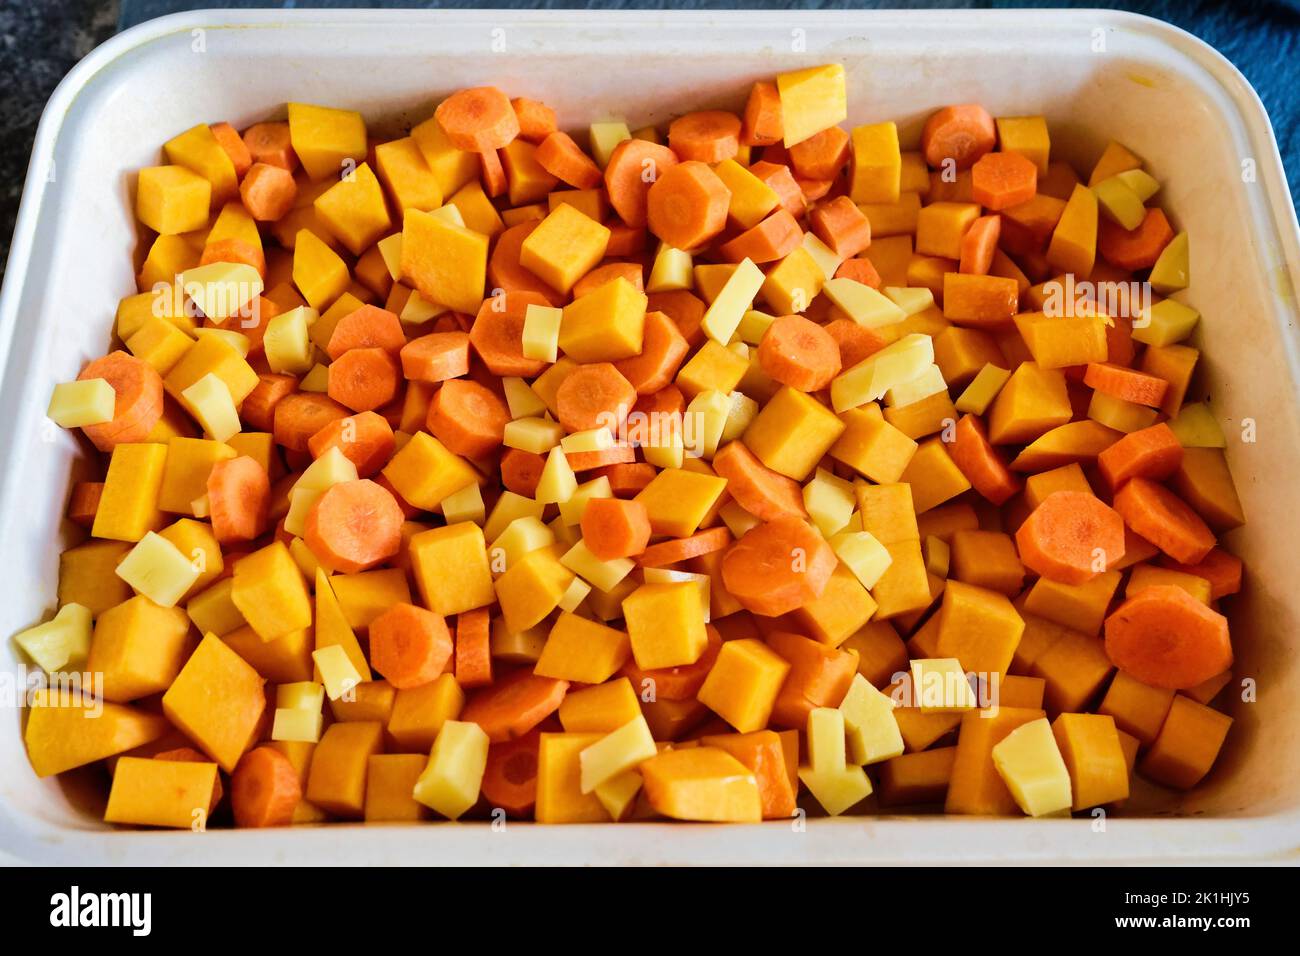 chopped carrots, potatoes and pumpkin in a baking dish Stock Photo